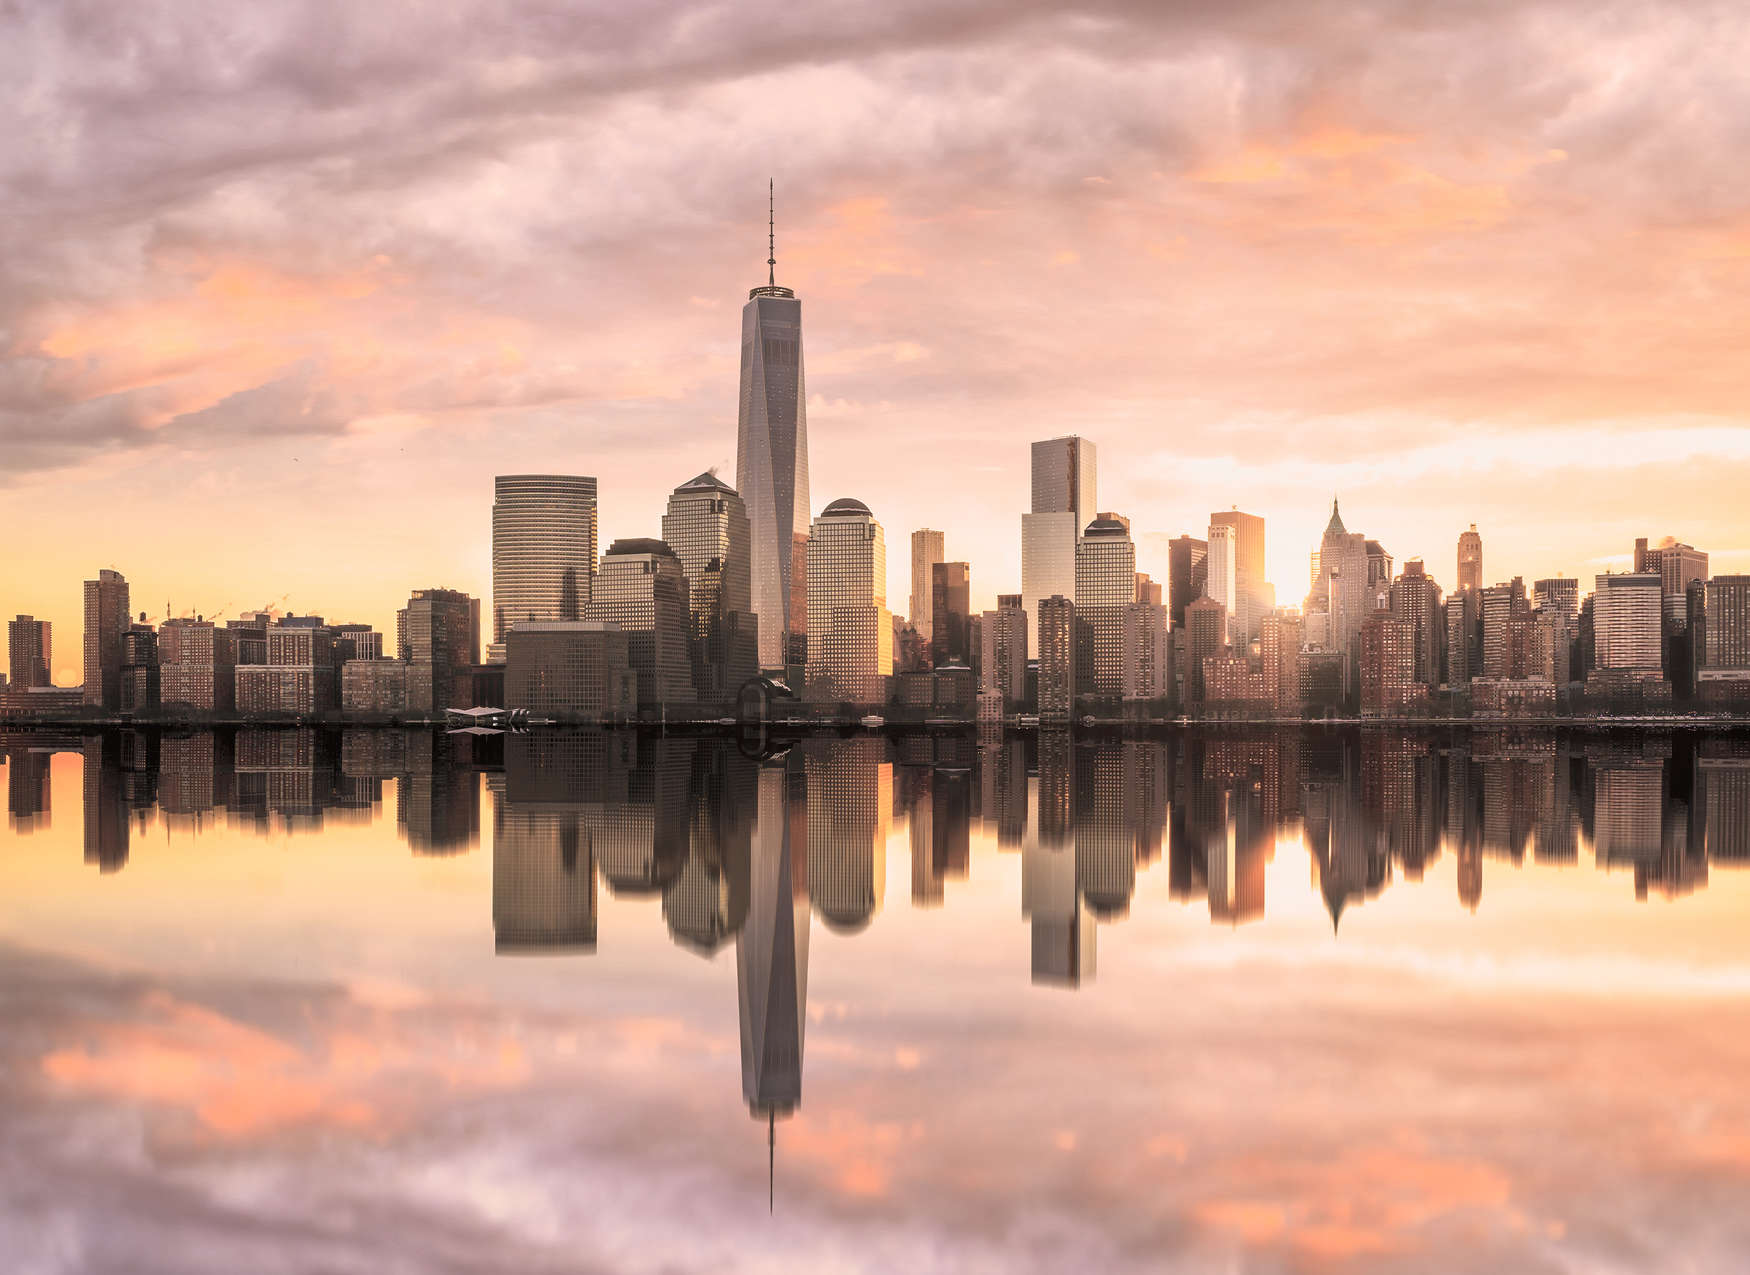             Fototapete New York Skyline am Abend – Grau, Orange, Gelb
        